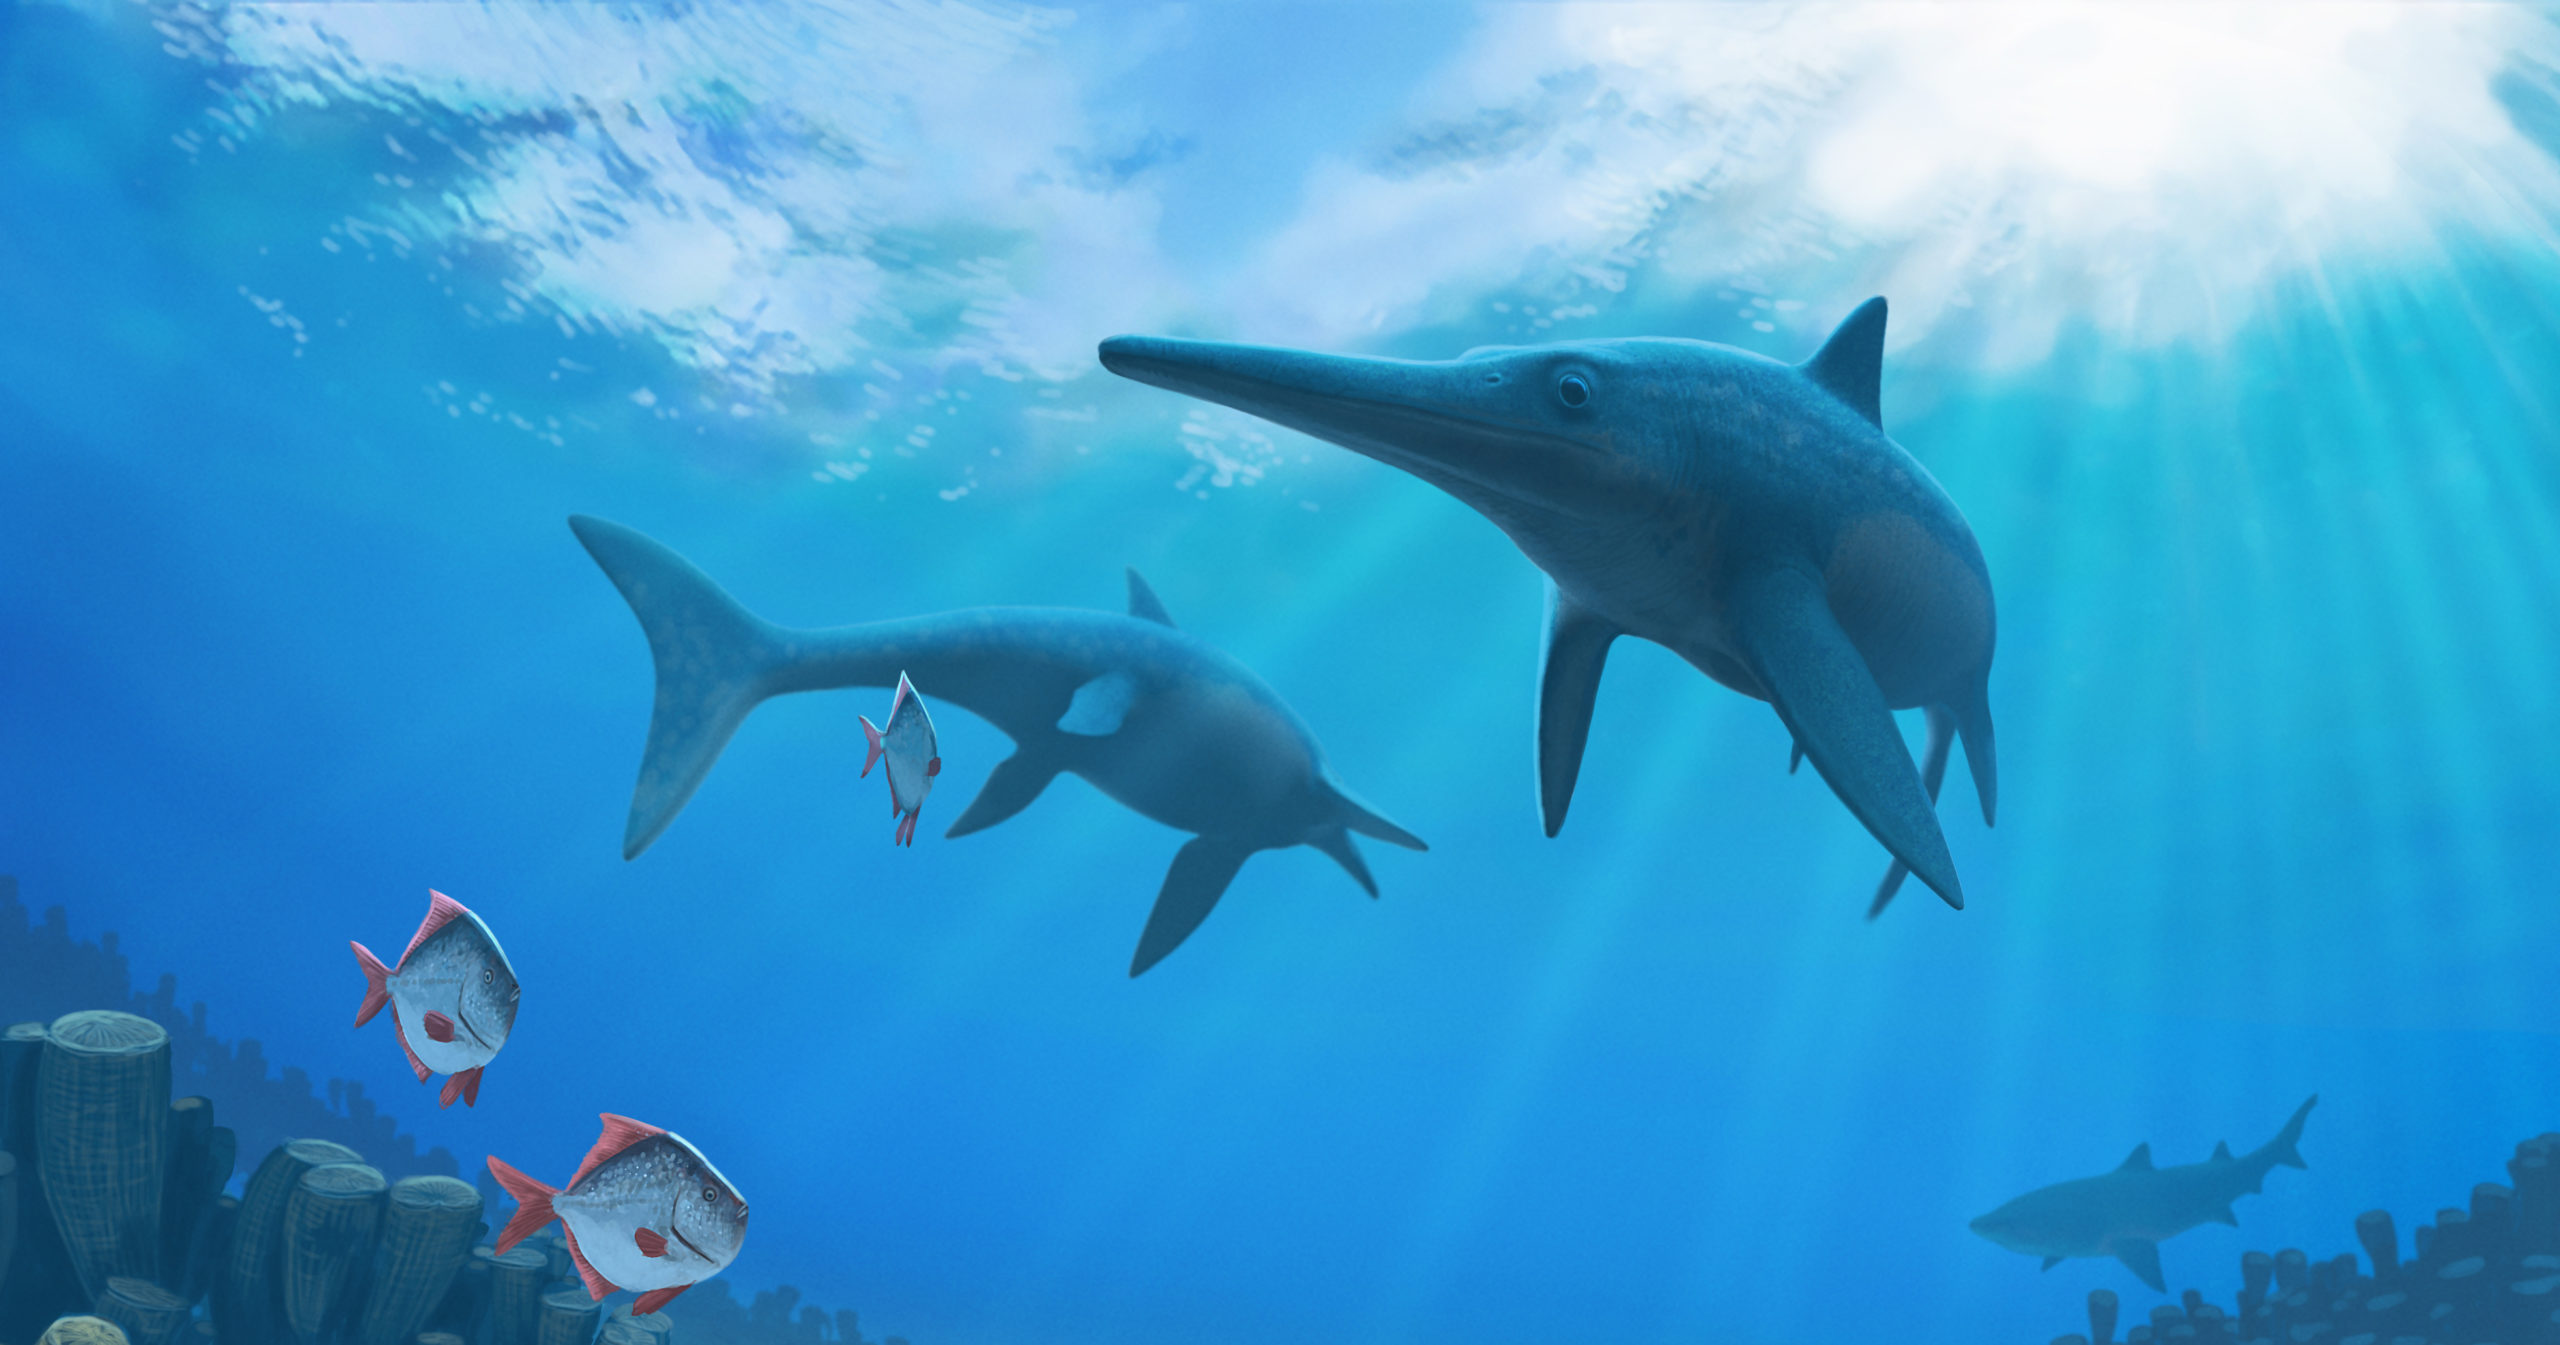 Artist's impression of ichthyosaurs. (Image: Andrey Atuchin)